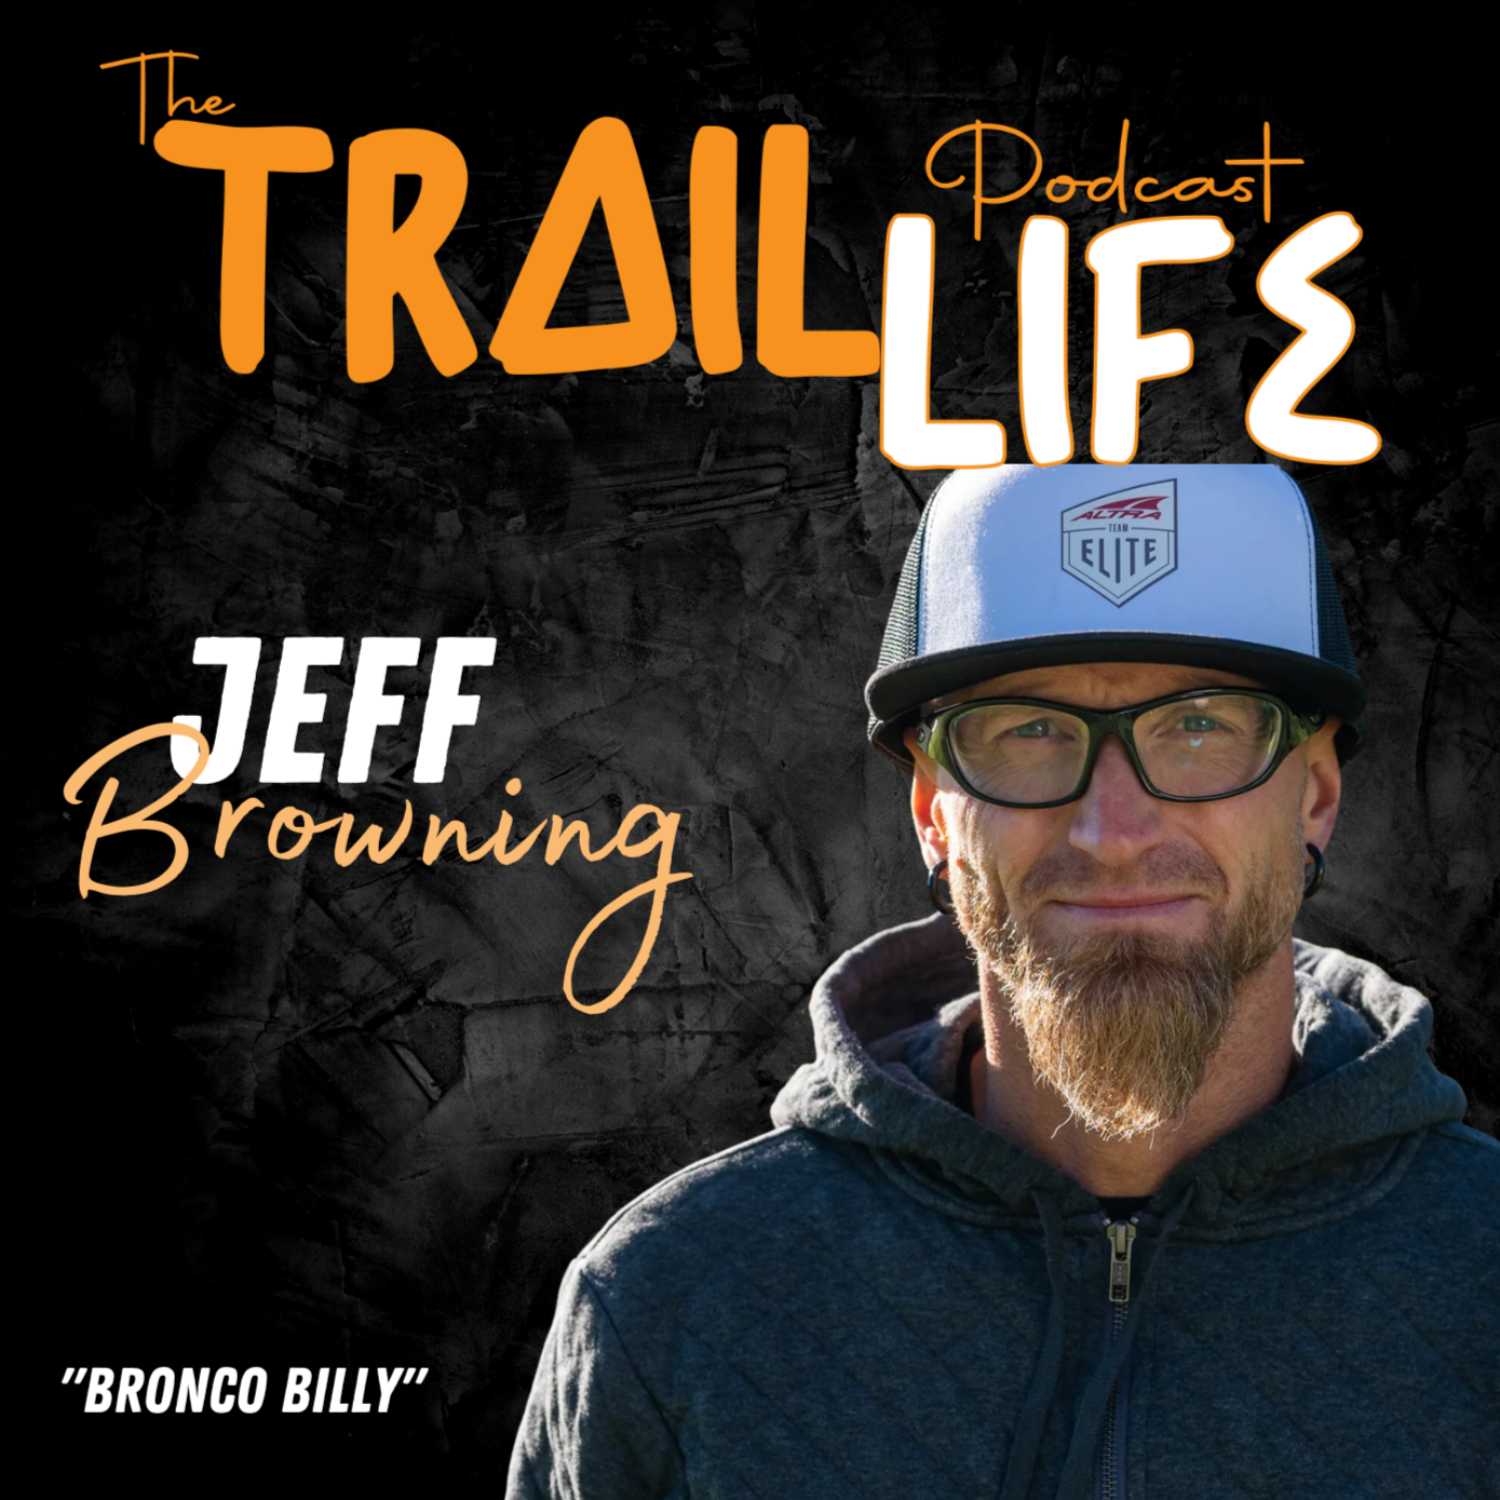 Jeff Browning "Bronco Billy"